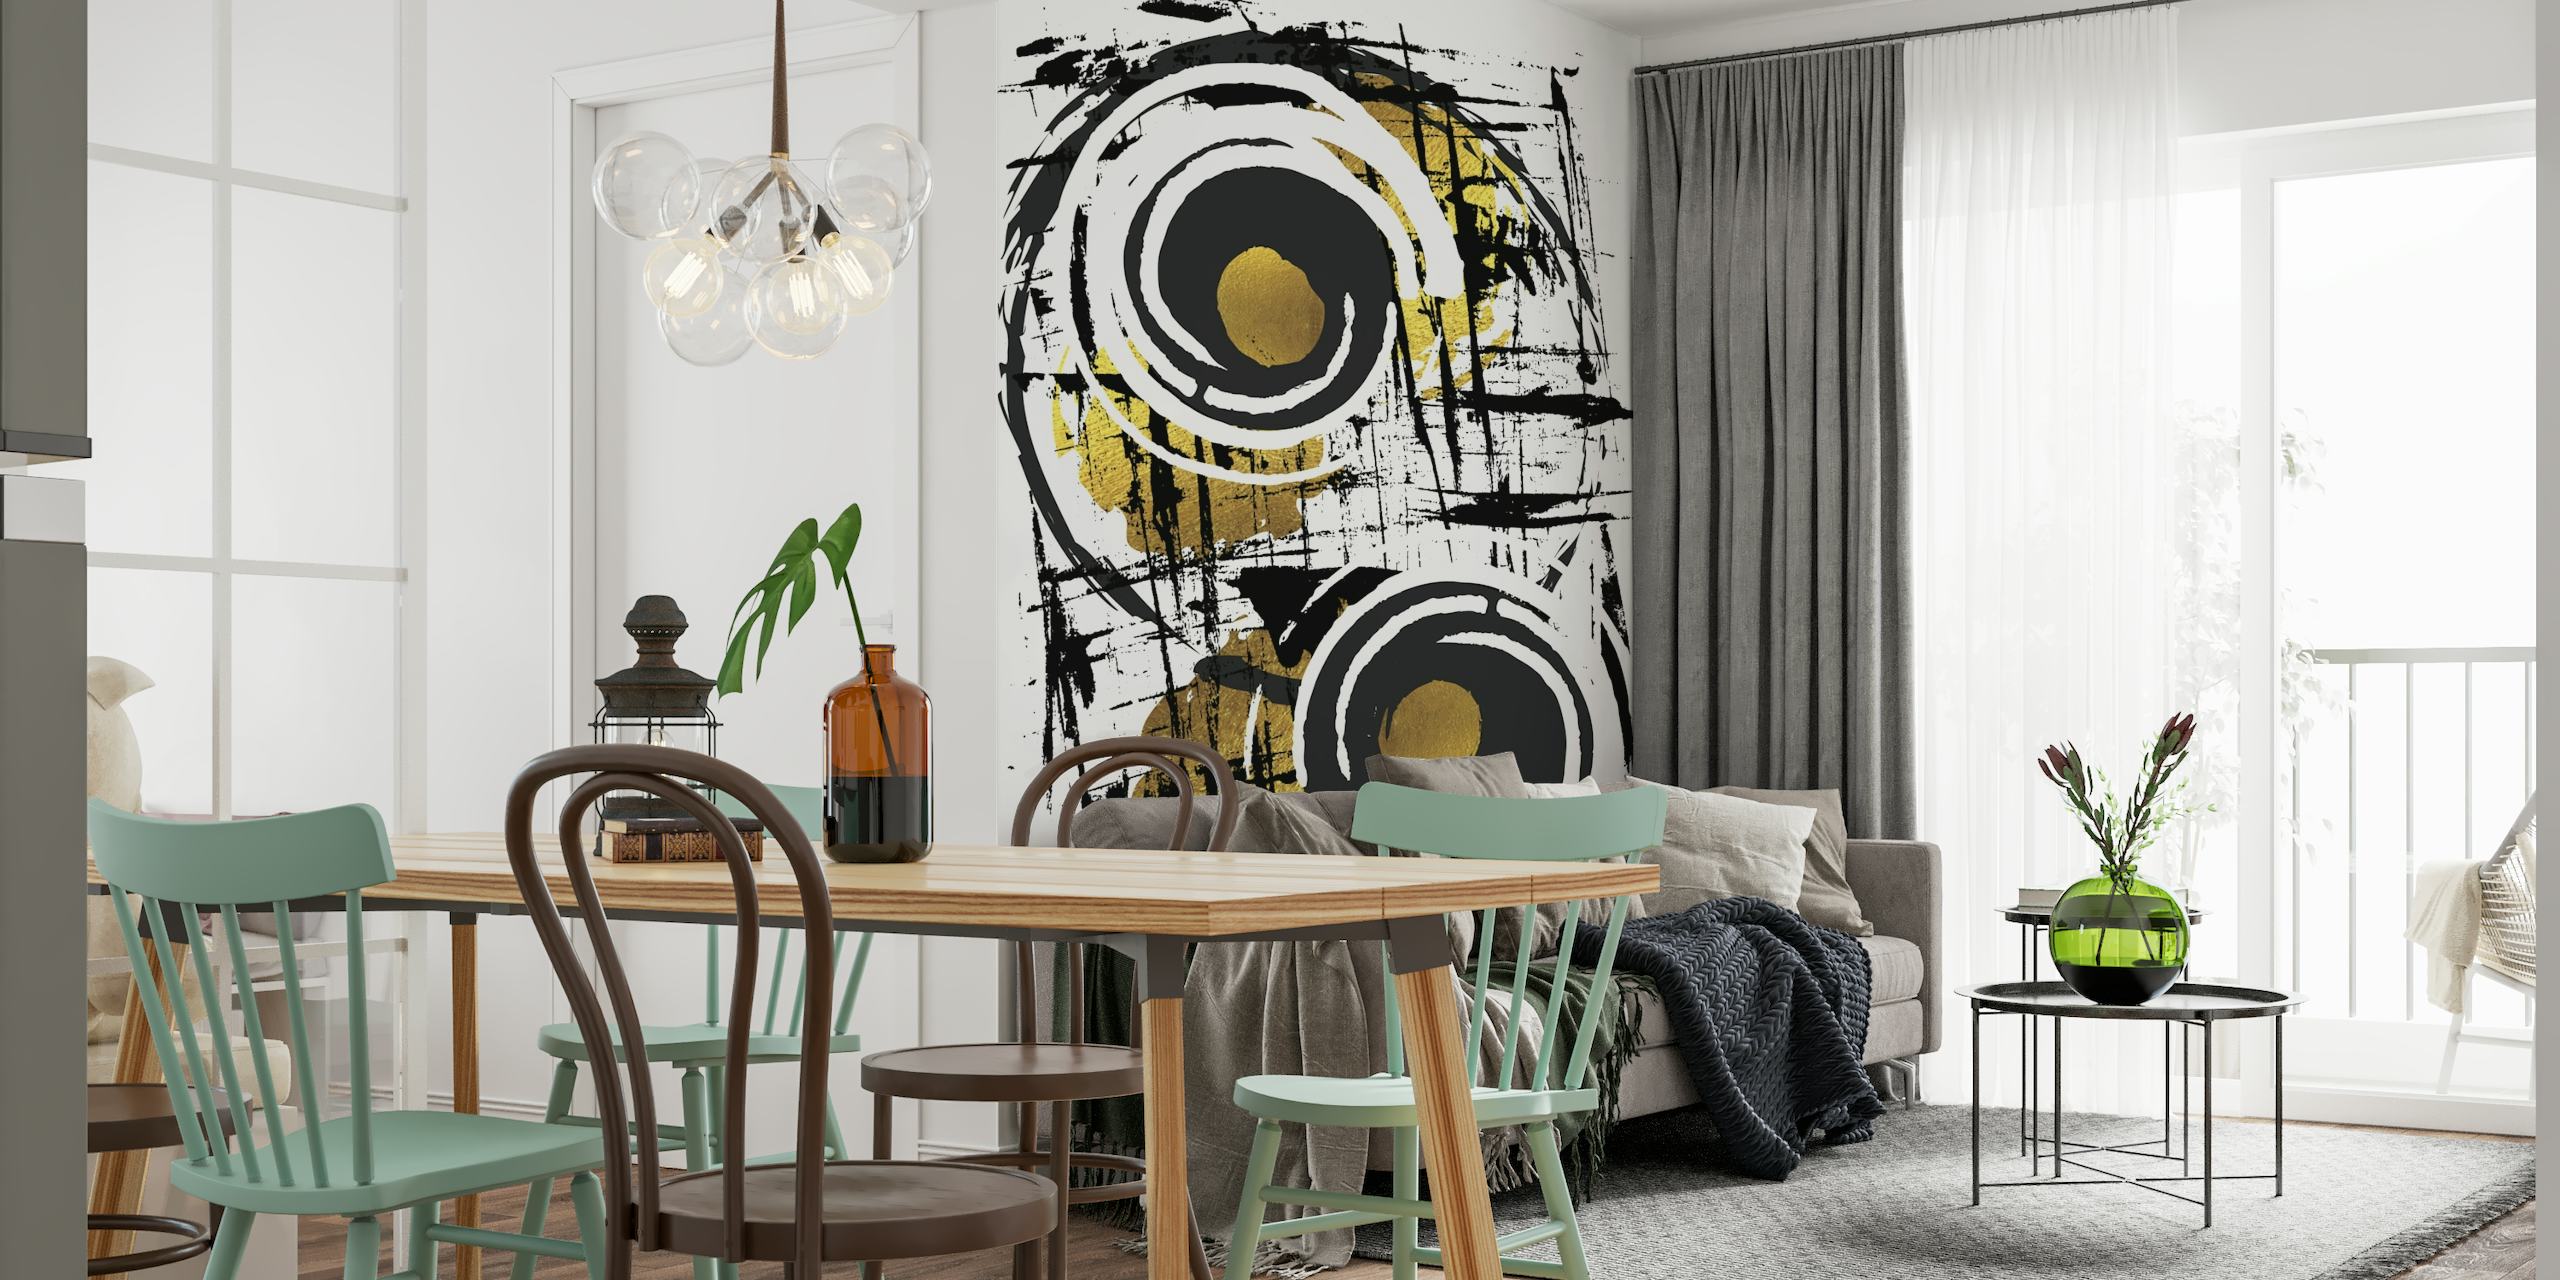 ABSTRAKT KUNST Hypnotiserende vægmaleri med sorte penselstrøg og gyldne cirkler på en hvid baggrund